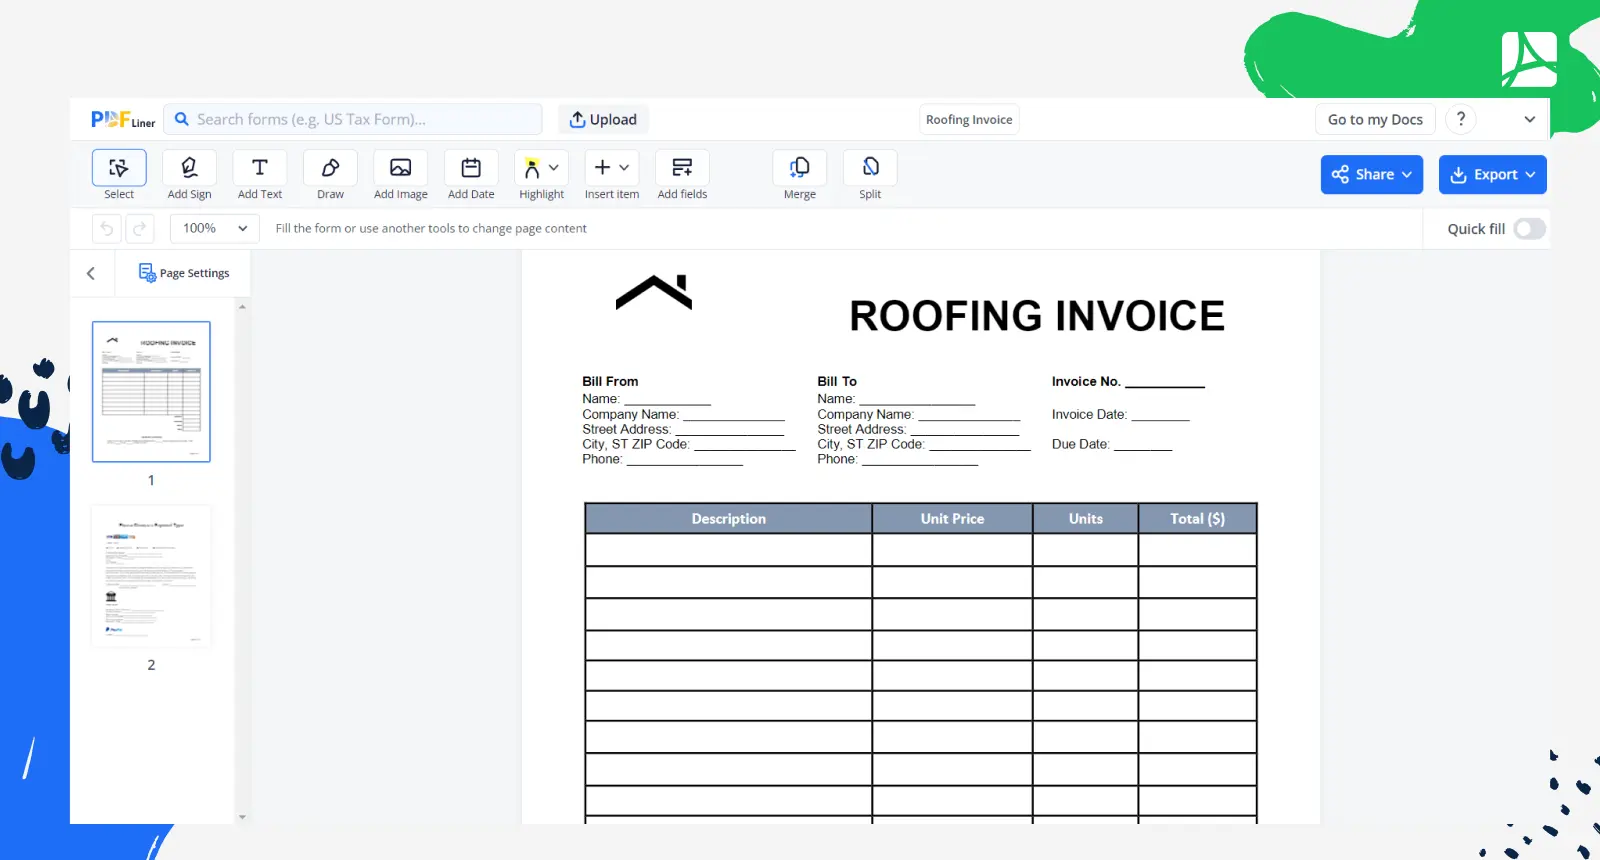 Roofing Invoice Screenshot